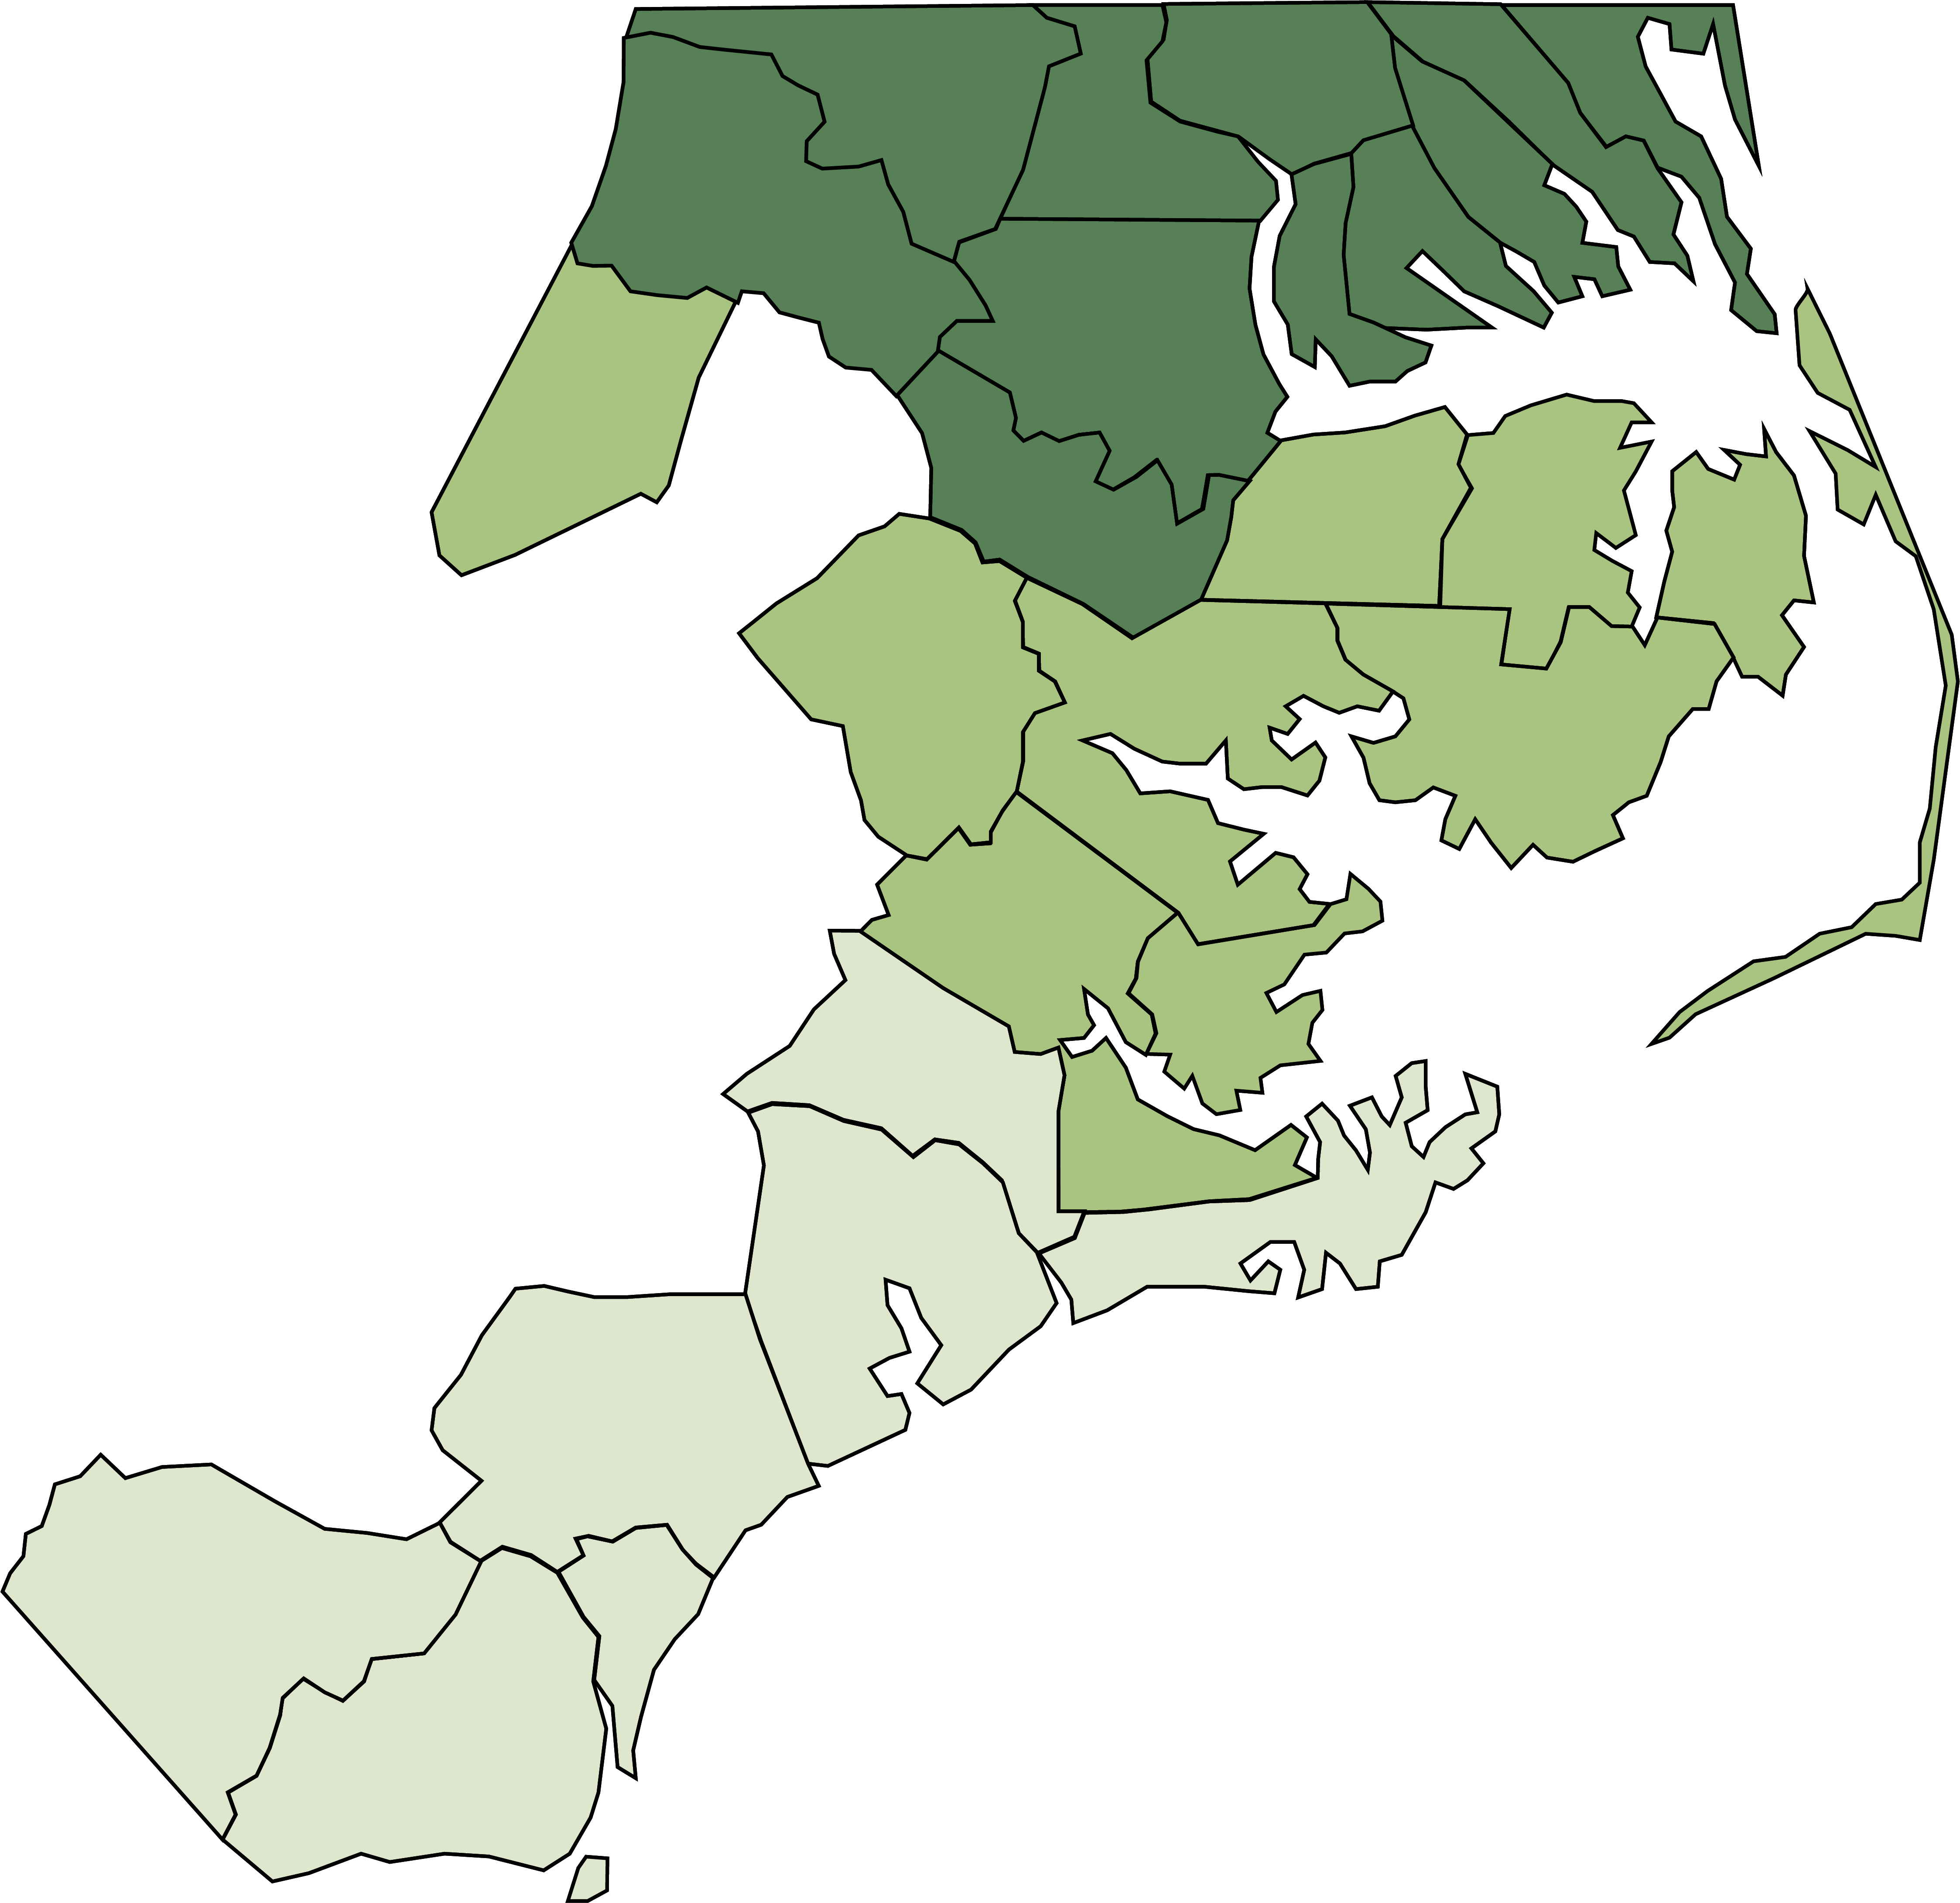 Trillium Catchment area map of eastern NC